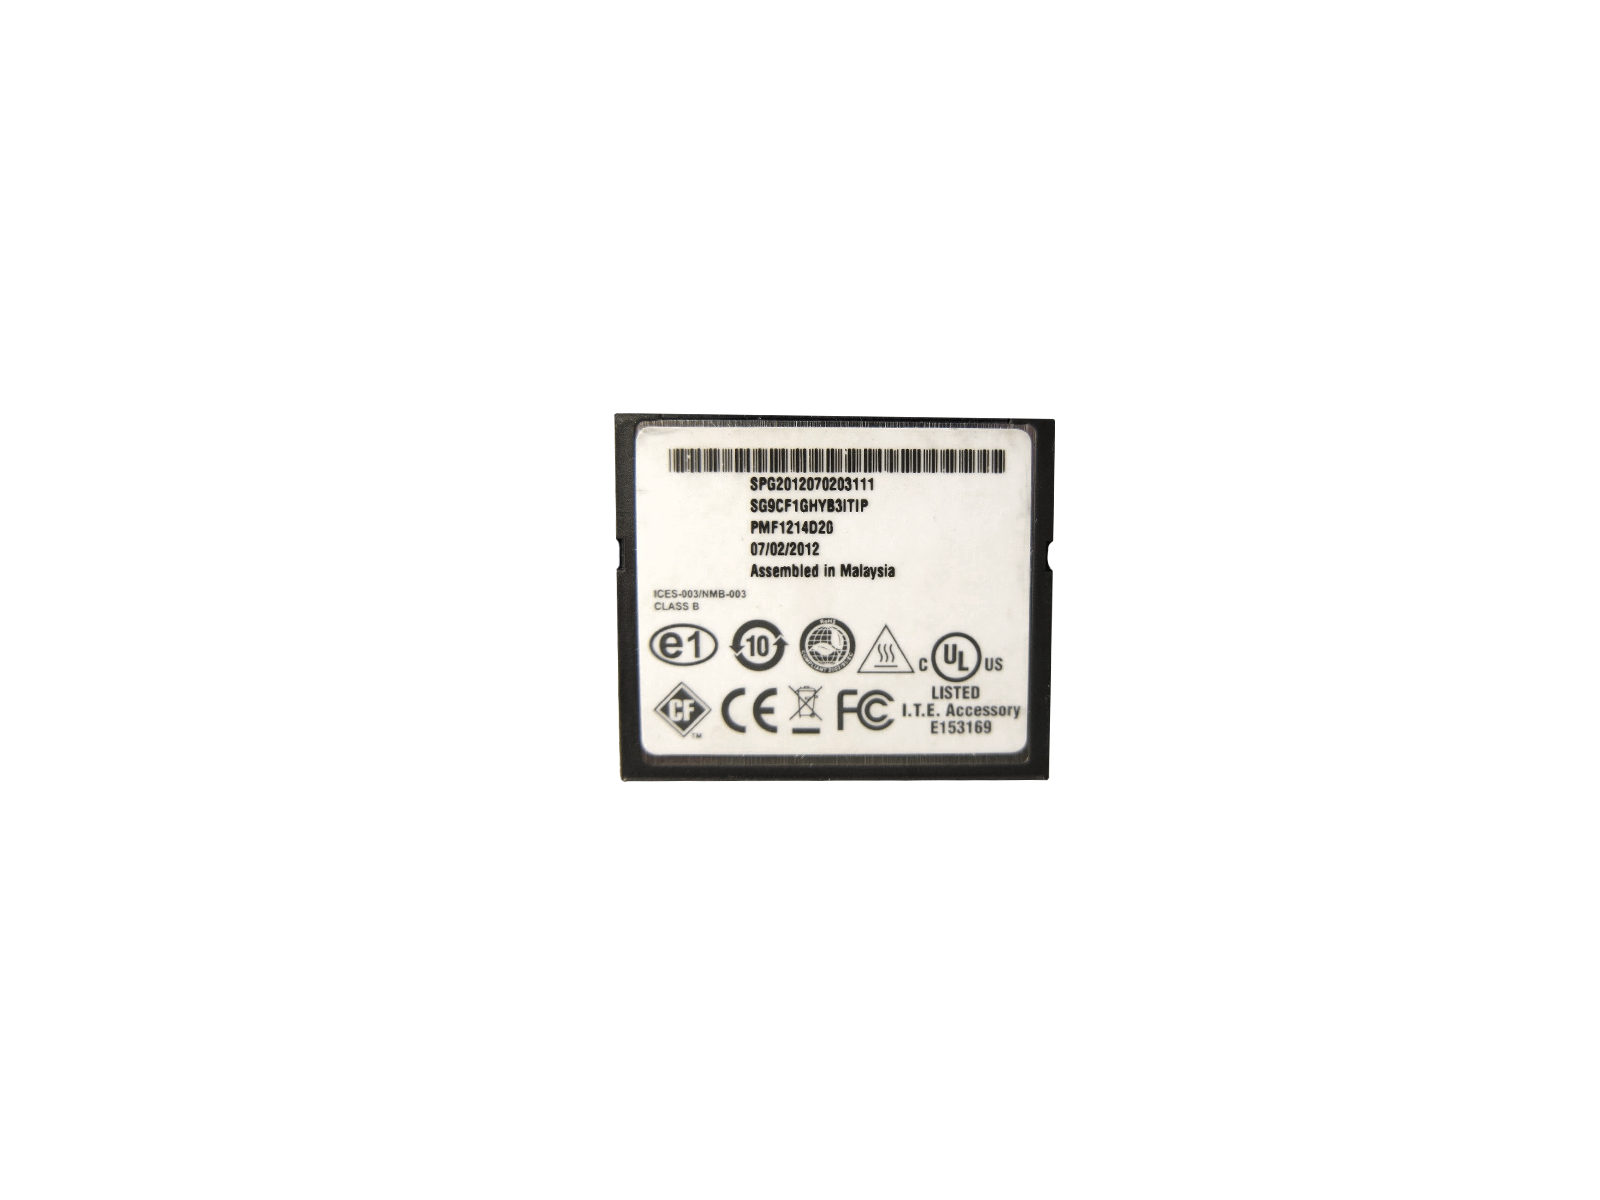 1GB Smart XceedCF CF Flash Card HP TippingPoint 5066-1189 Industrial Grade Cisco.